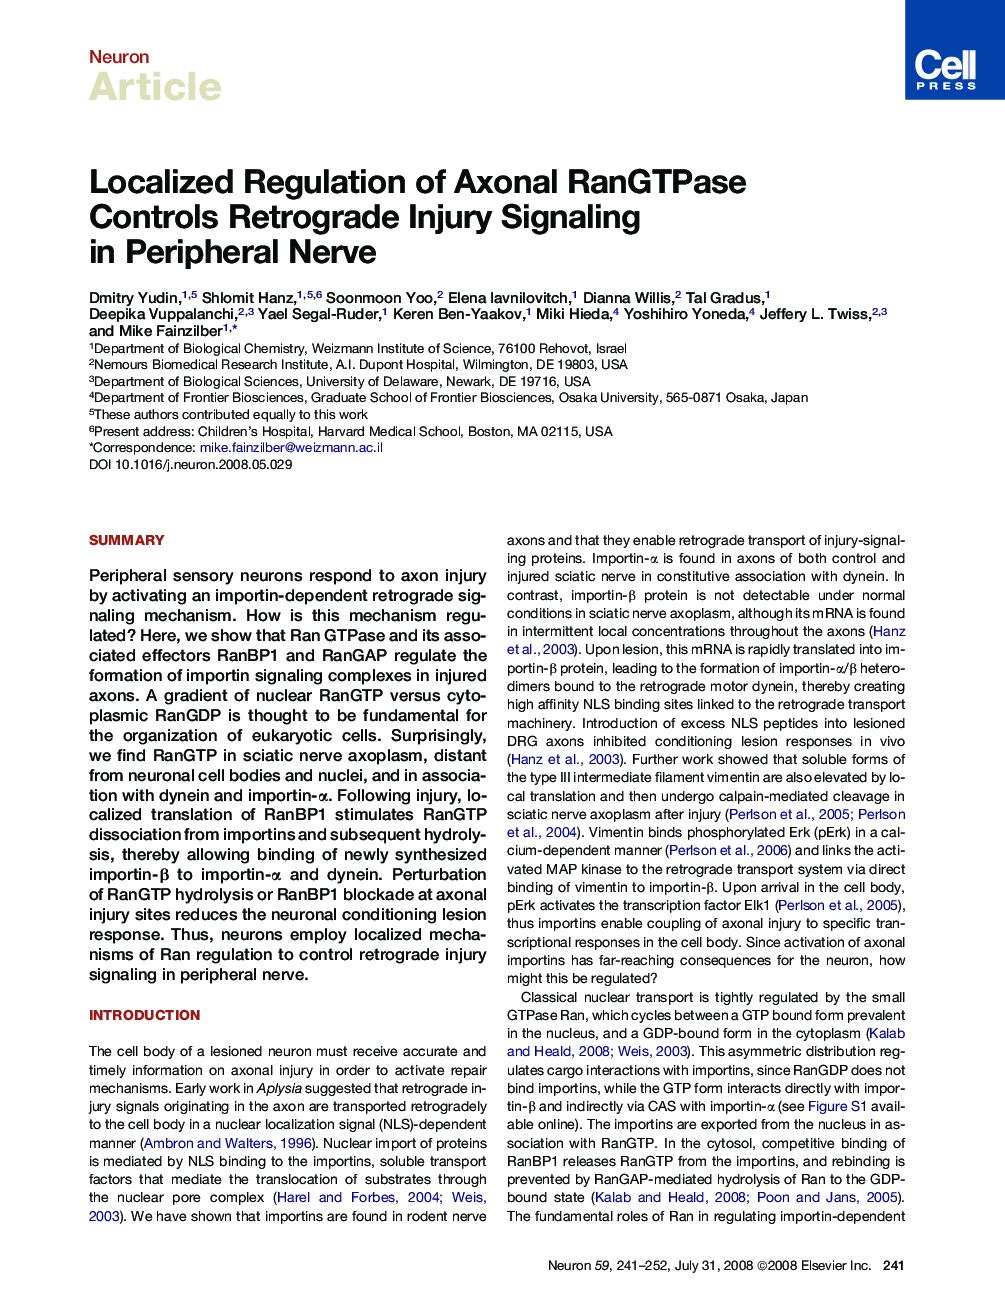 Localized Regulation of Axonal RanGTPase Controls Retrograde Injury Signaling in Peripheral Nerve